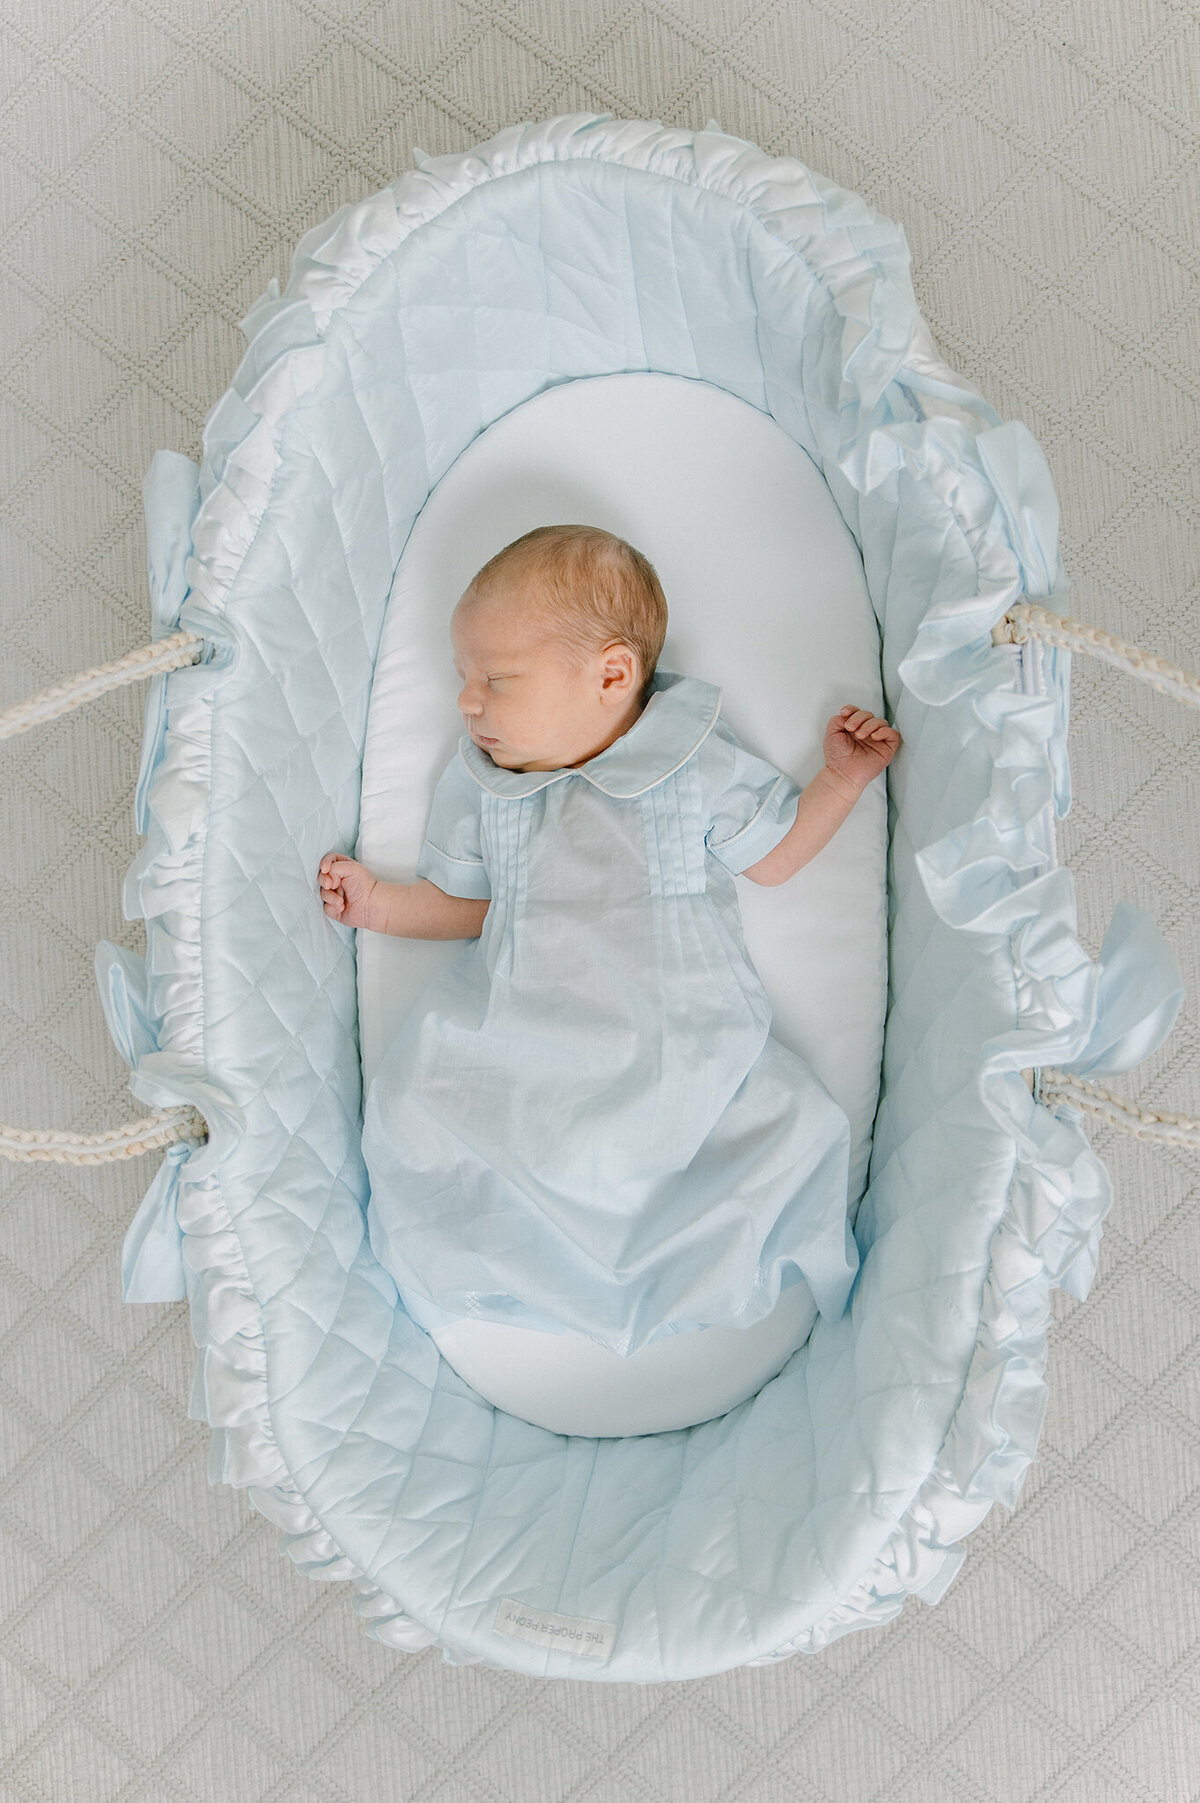 Newborn sleeping in a blue ruffle moses basket wearing a blue newborn gown.